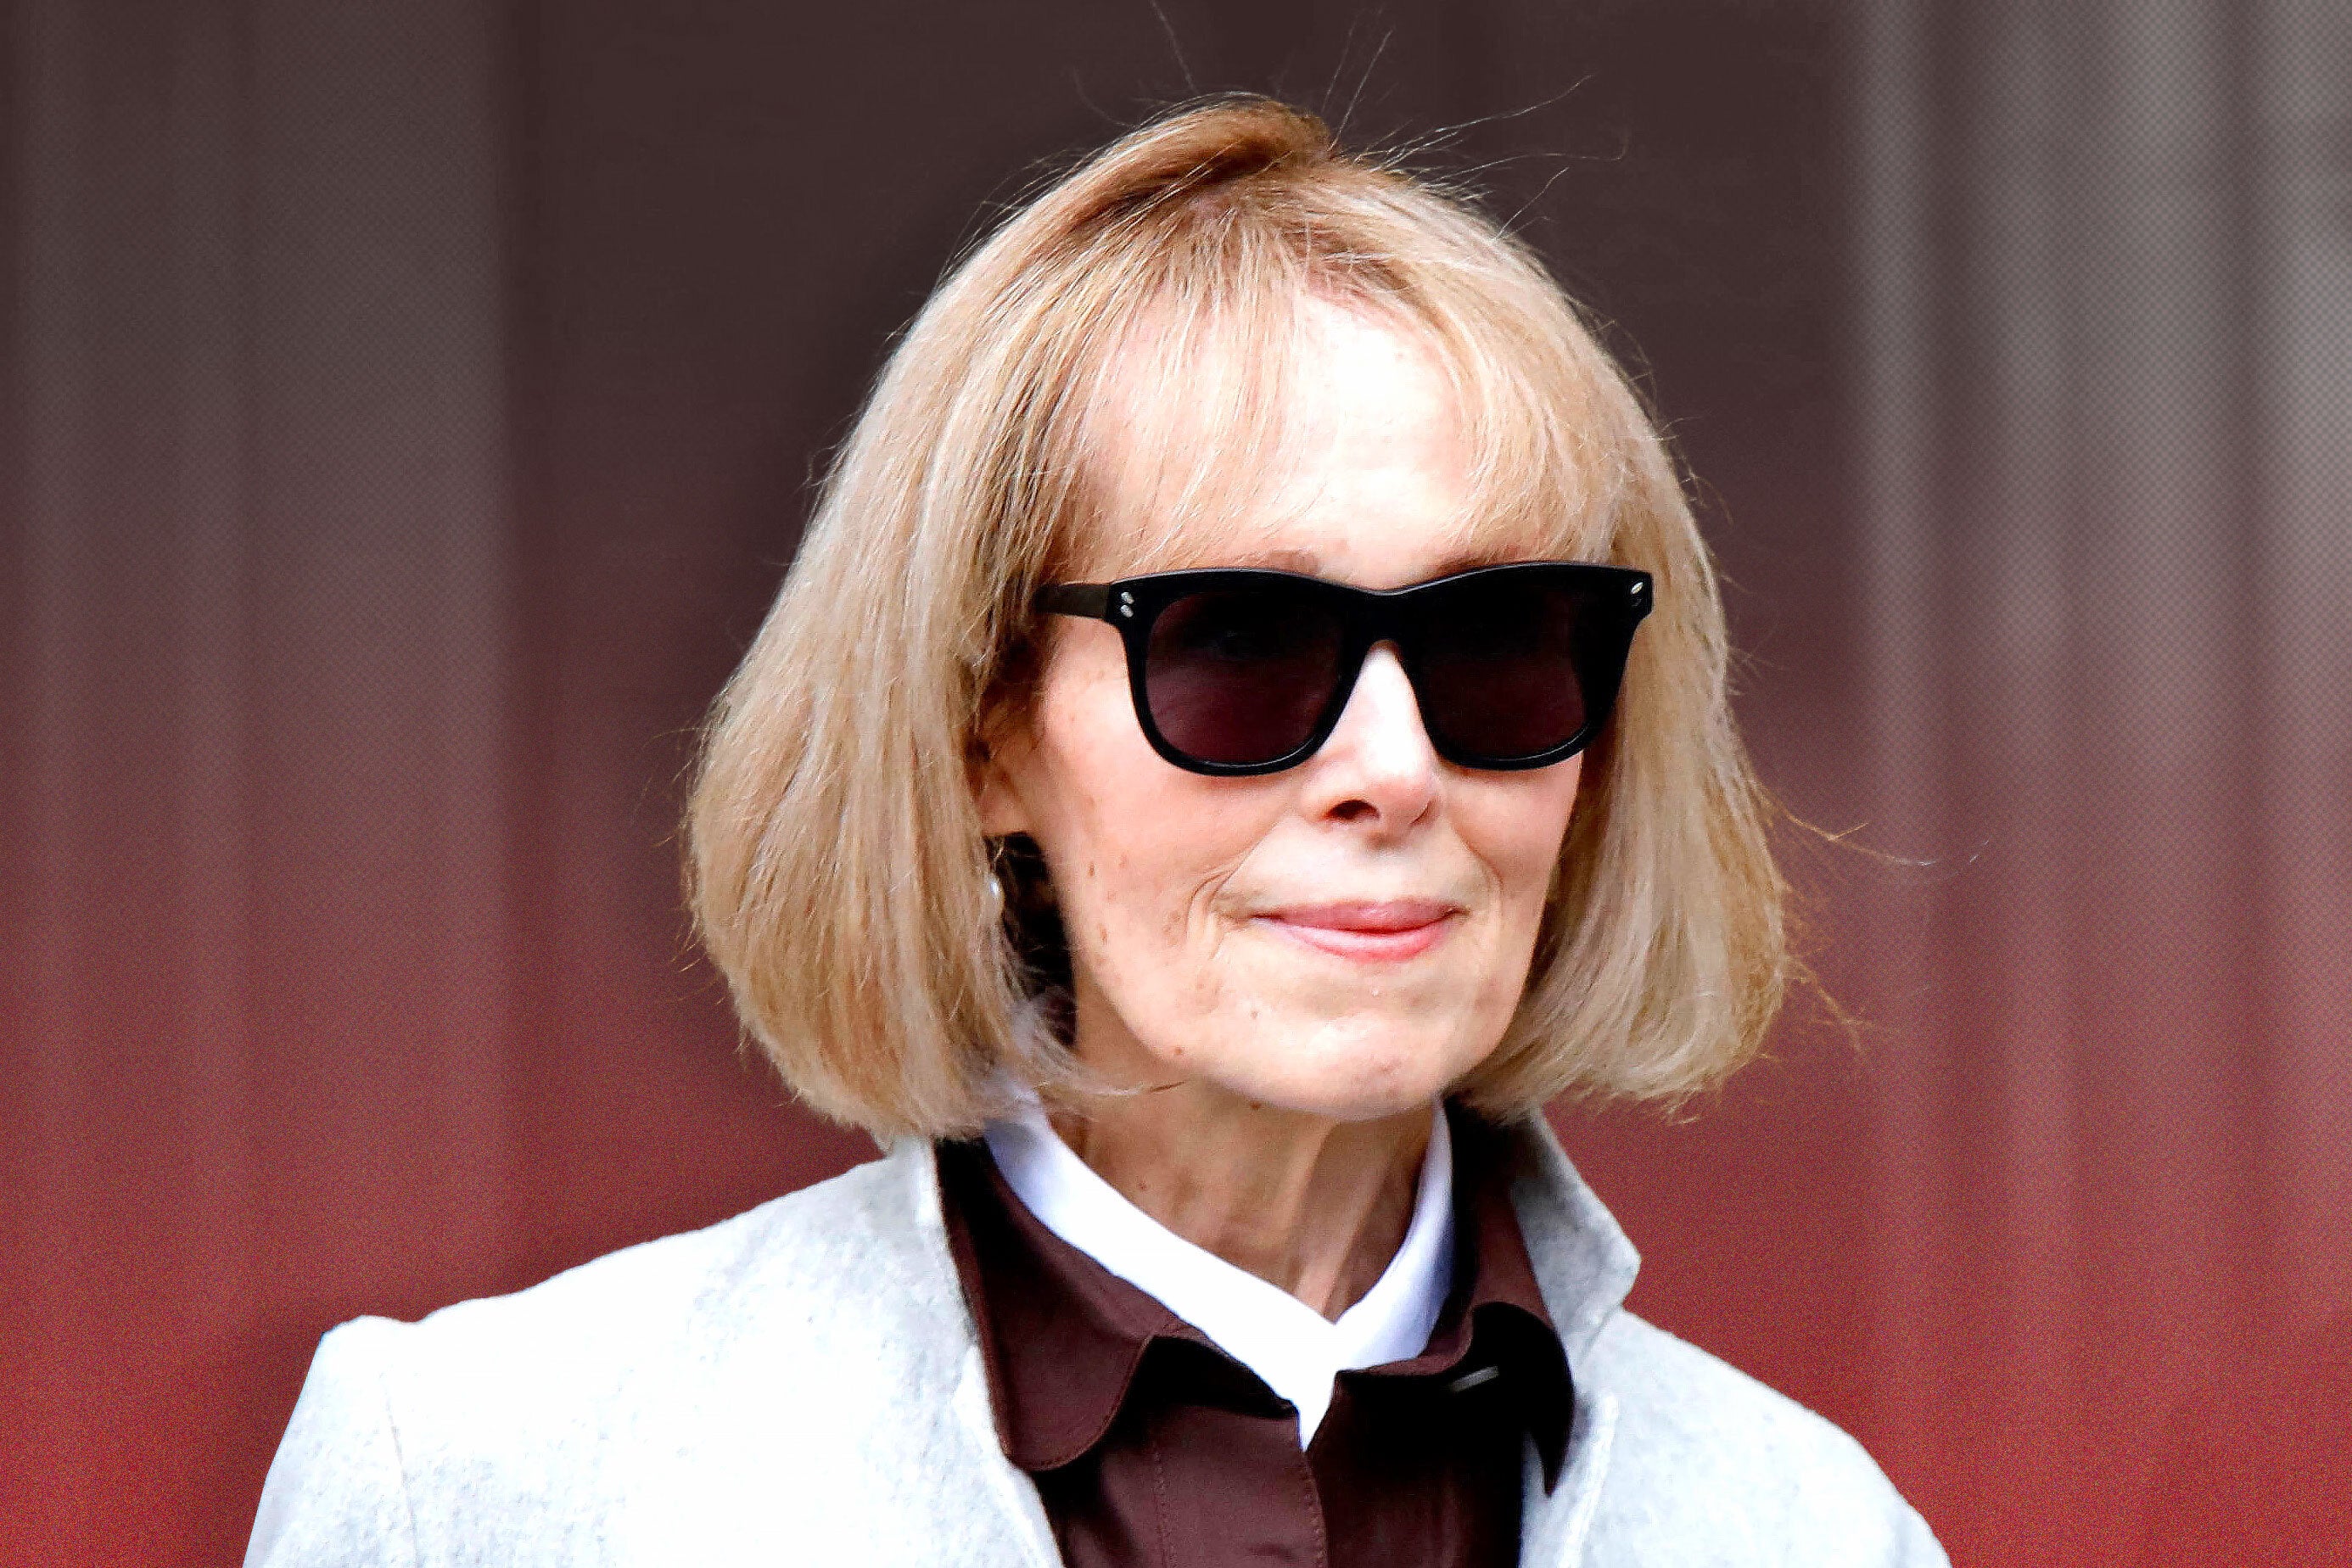 An image of E. Jean Carroll, wearing sunglasses.